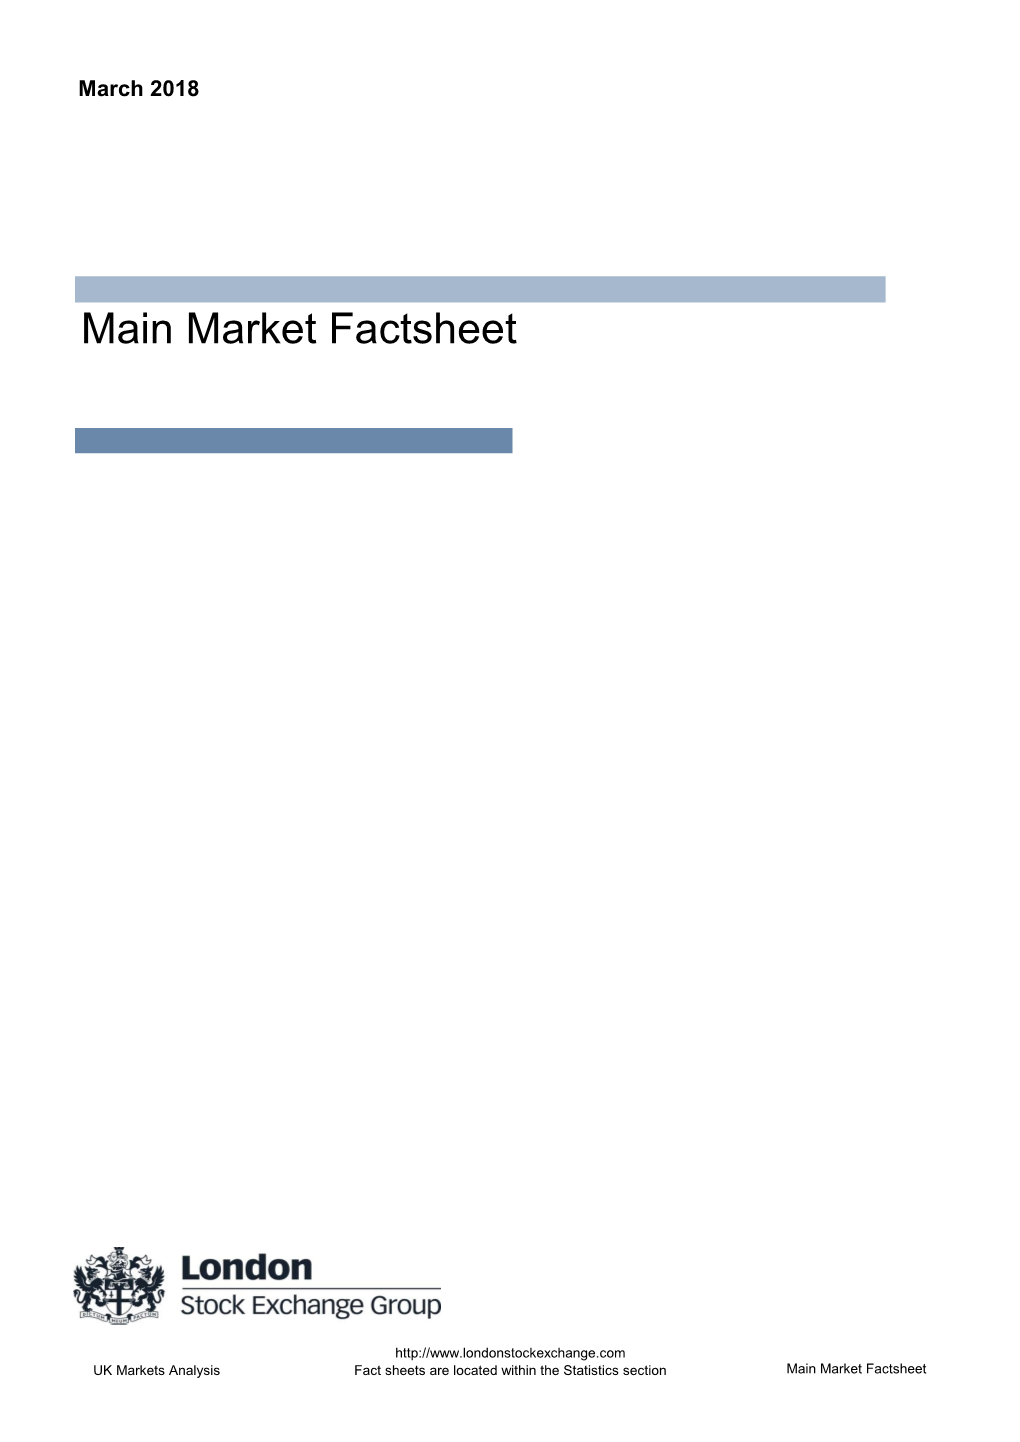 Primary Market Fact Sheet